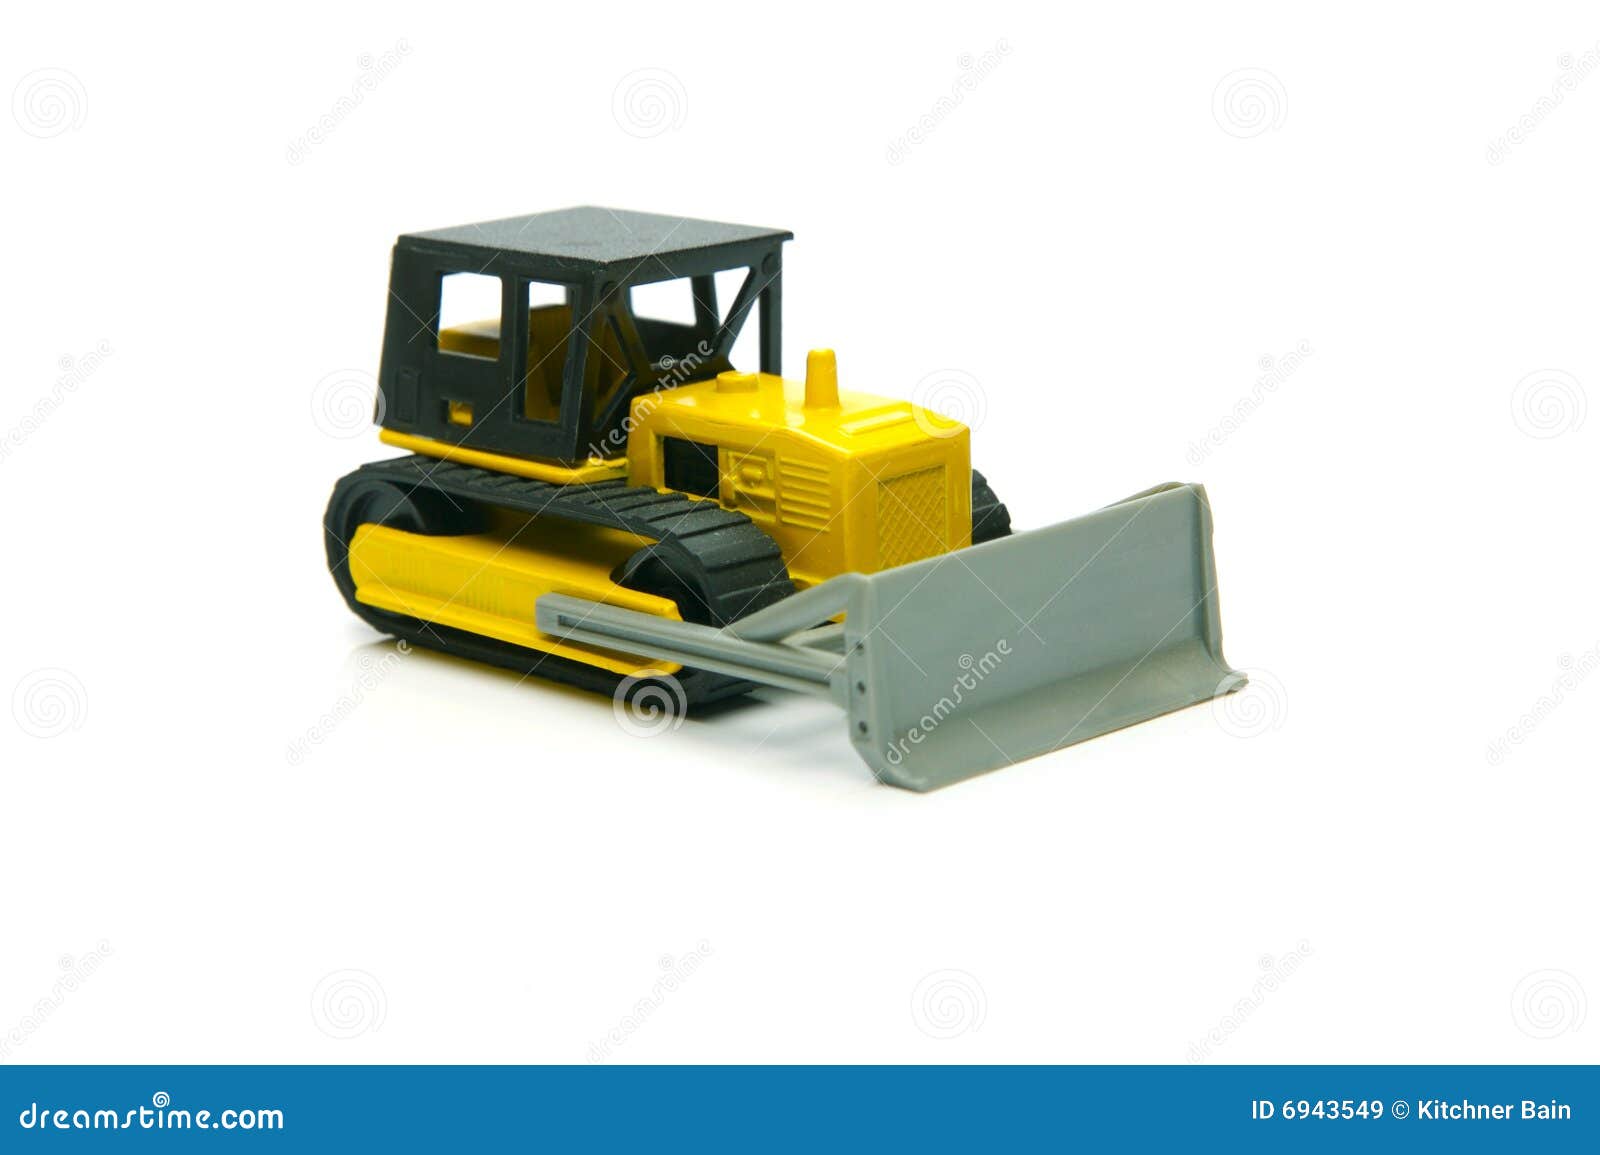 Miniature Construction Toys 113